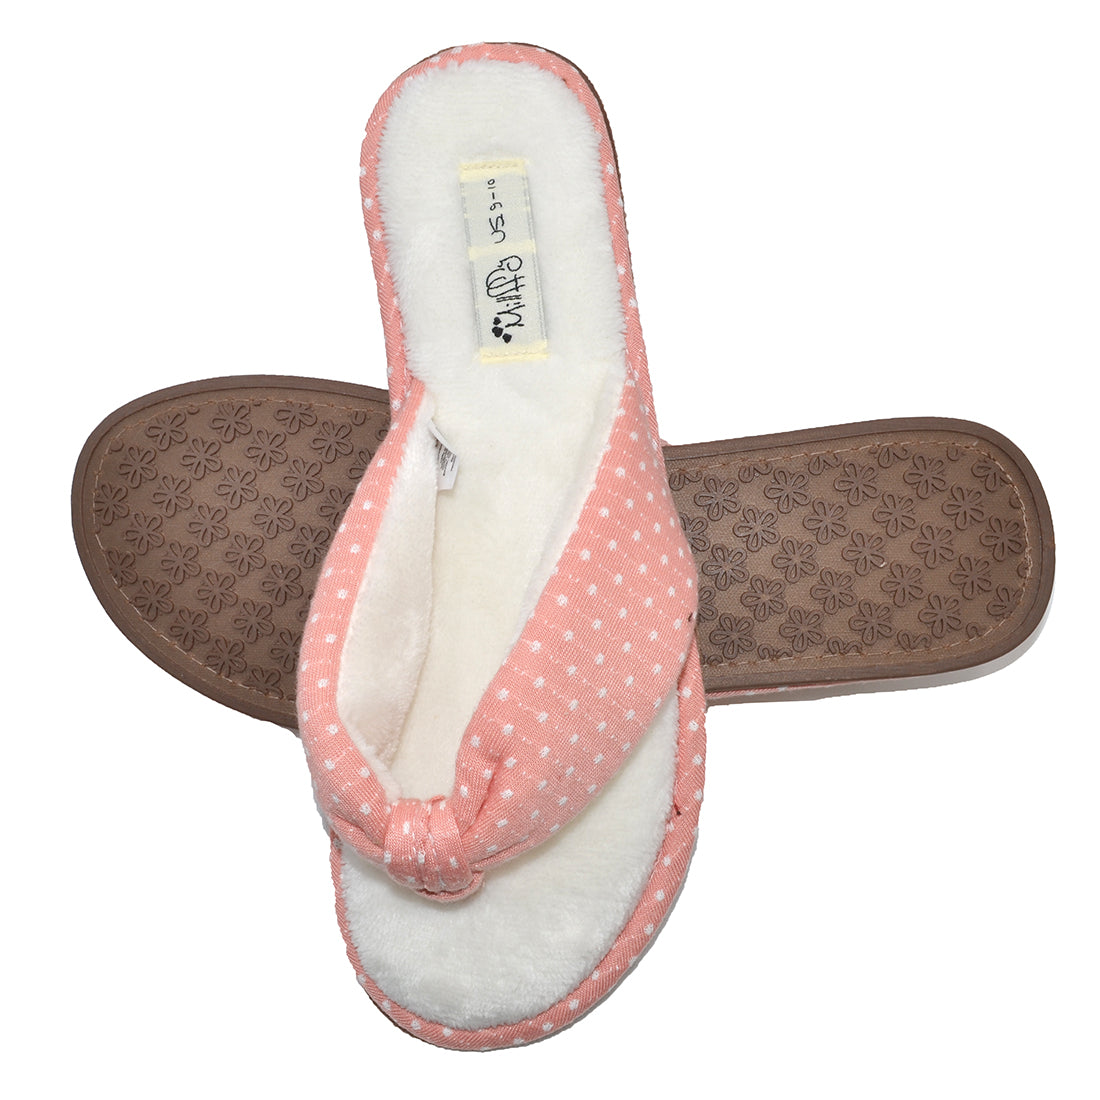 Millffy Cotton Cozy Shearling Thong Slide comfy Women girls Flip Flops Summer Slippers